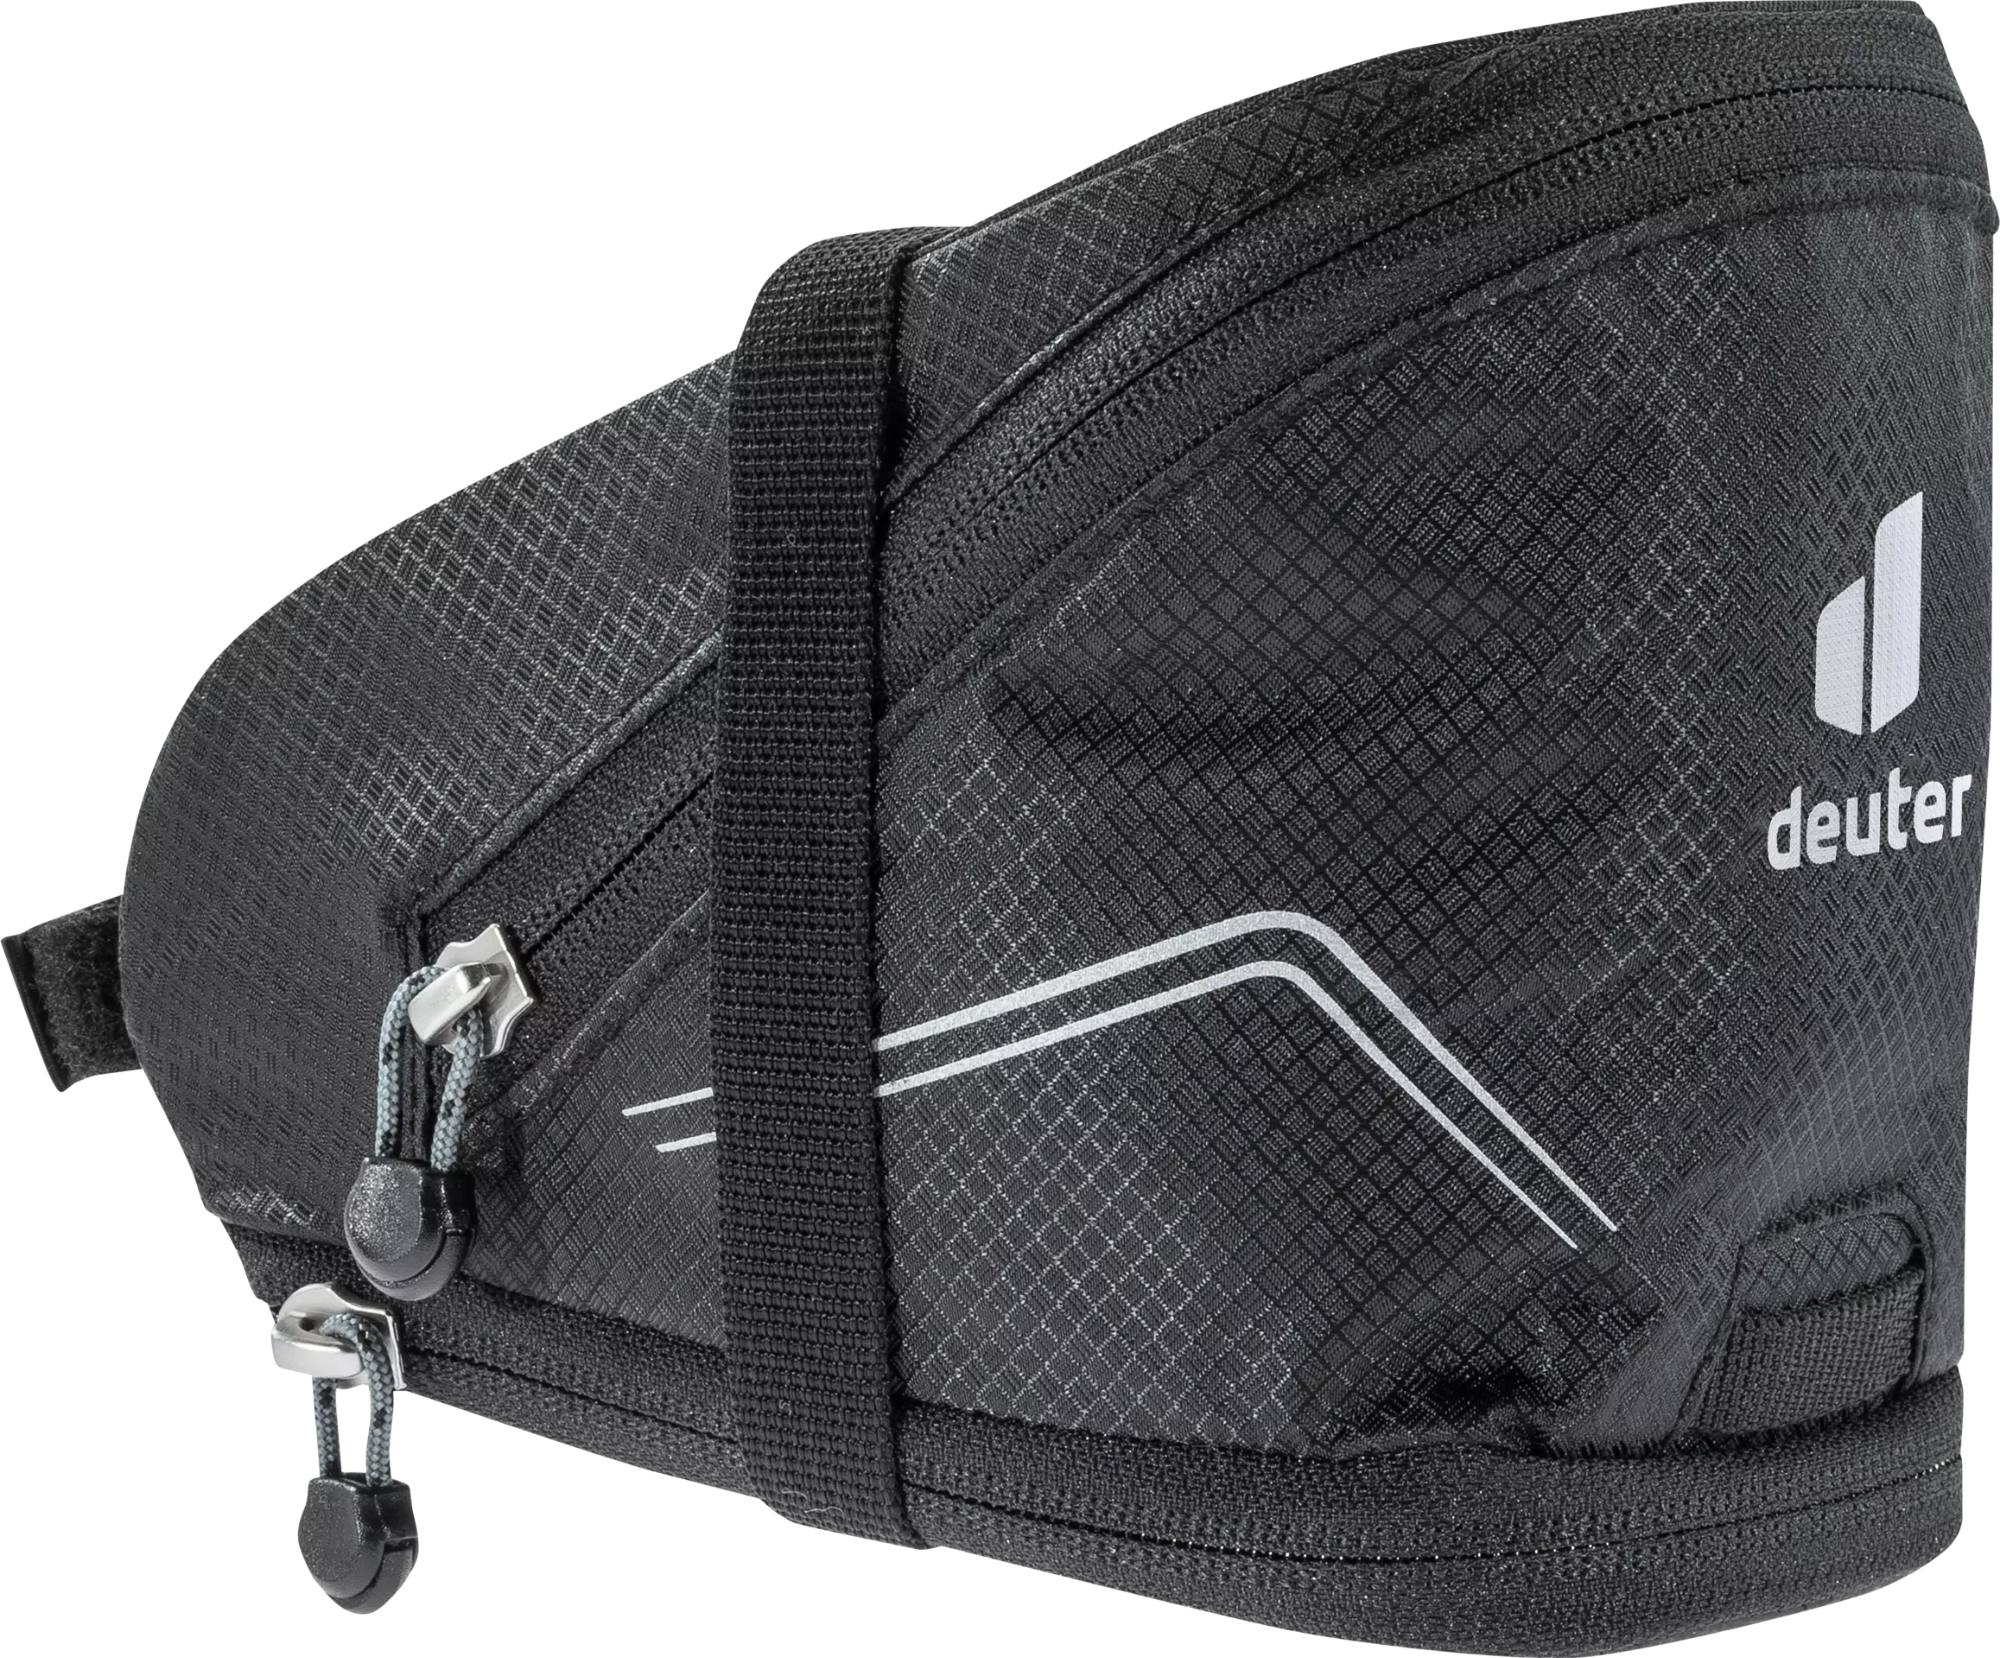 Deuter Bike Bag II Black